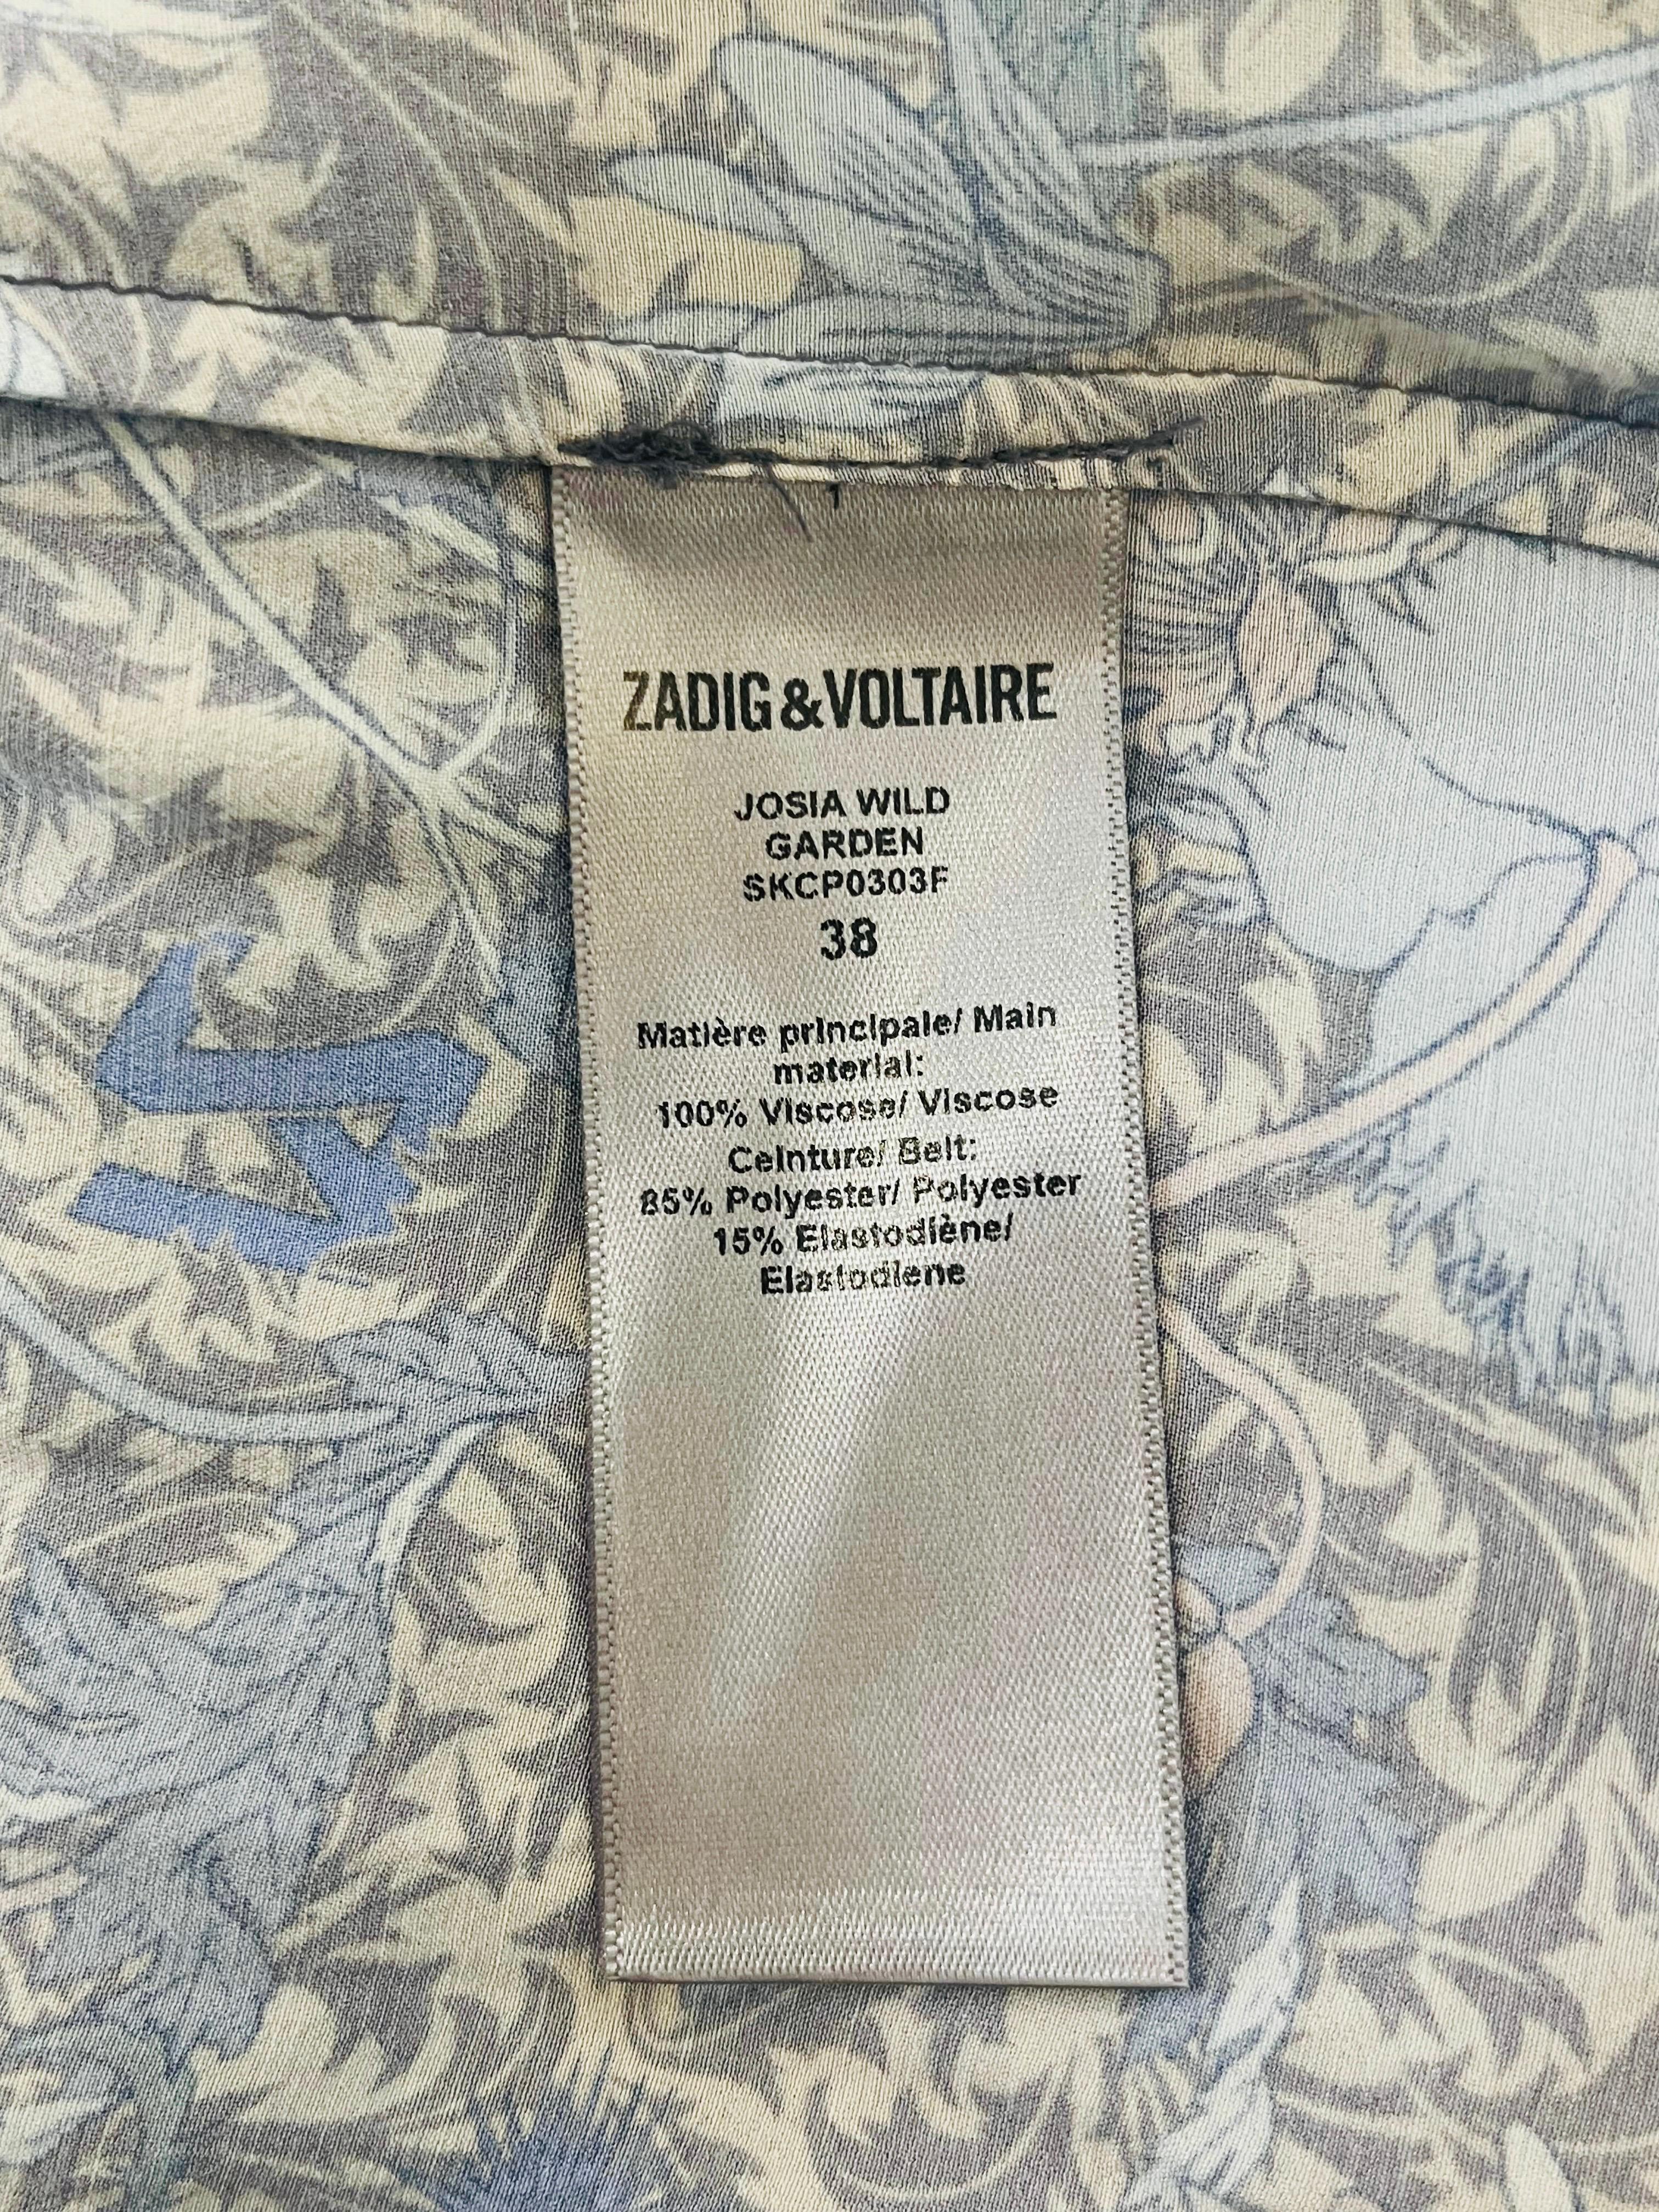 Zadig & Voltaire Wild Garden Maxi Skirt For Sale 4